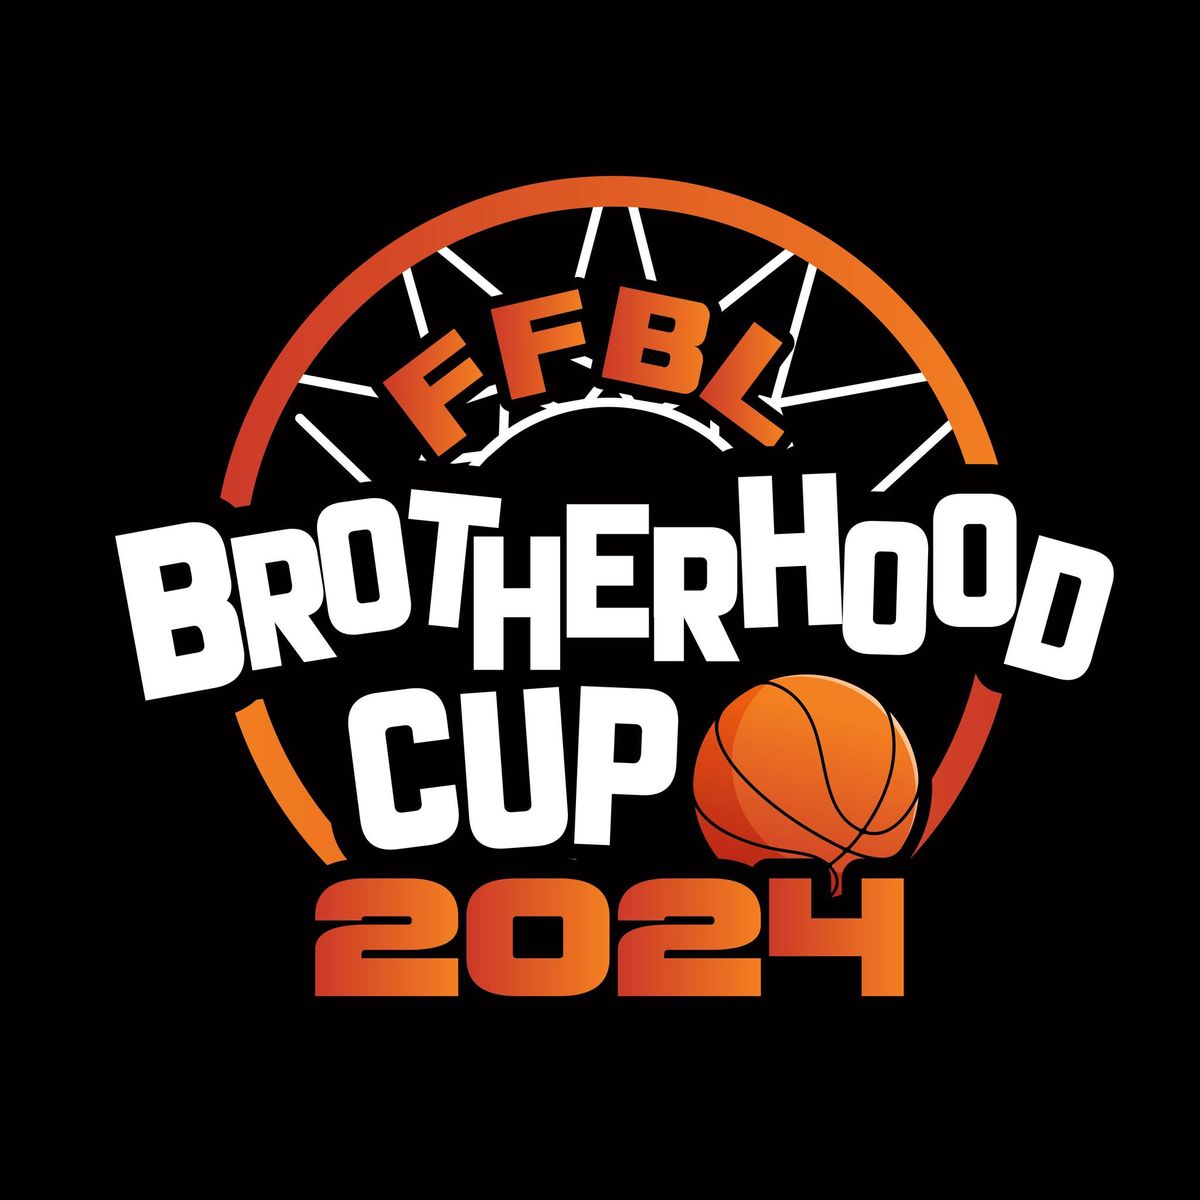 FFBL 4 - Brotherhood Cup